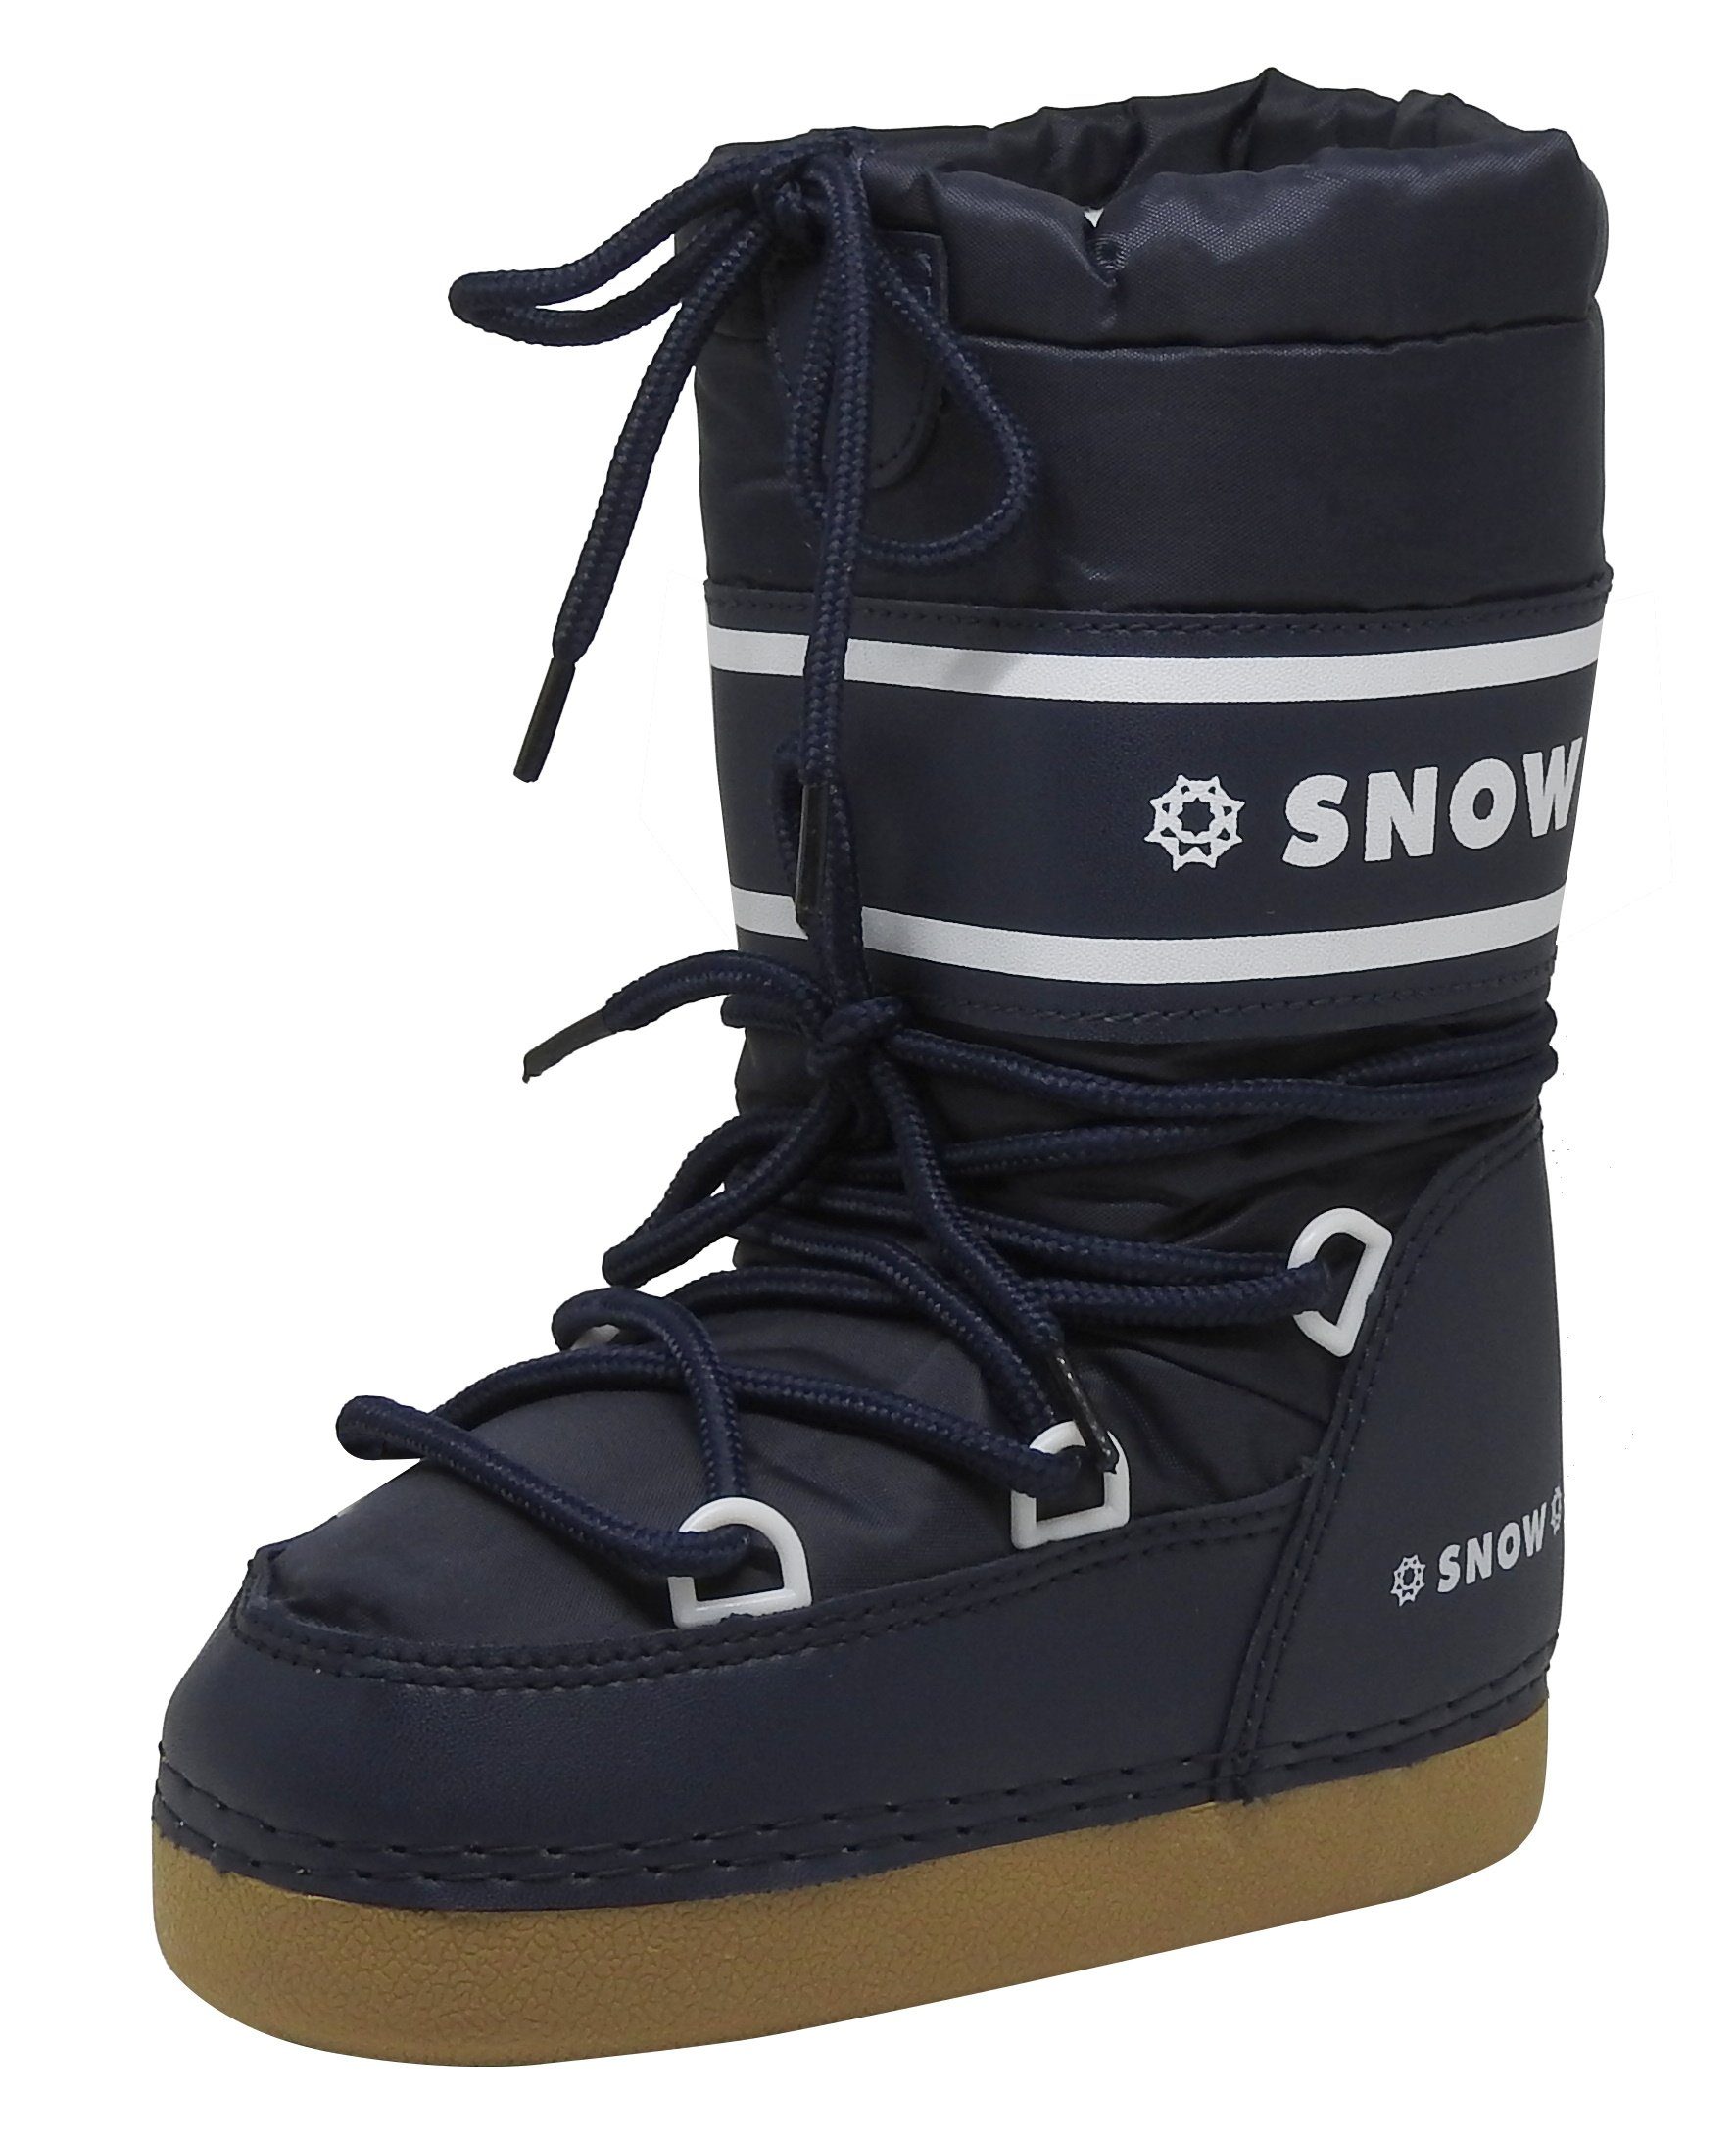 dynamic24 Snowboots Winterstiefel Winter Schuhe Stiefel Schneeschuhe Boots